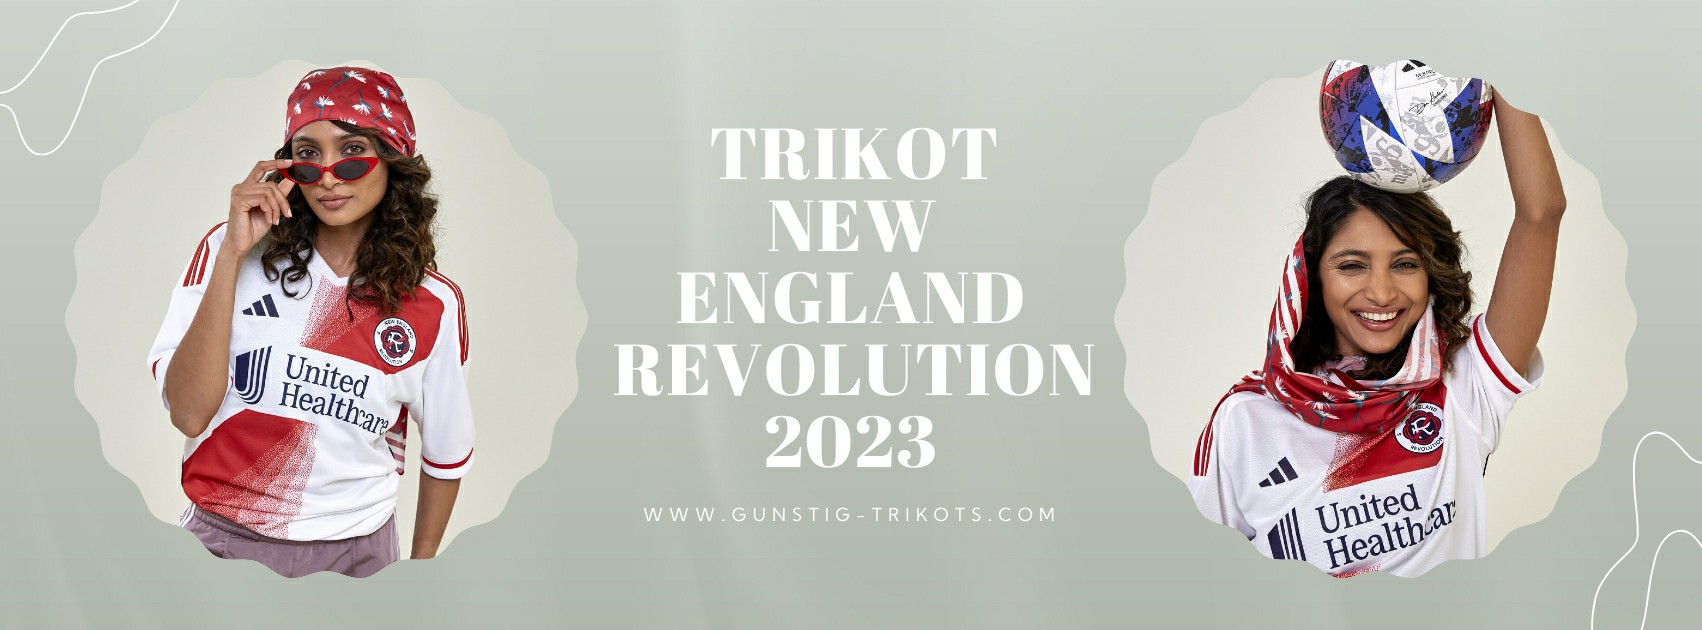 New England Revolution Trikot 2023-2024